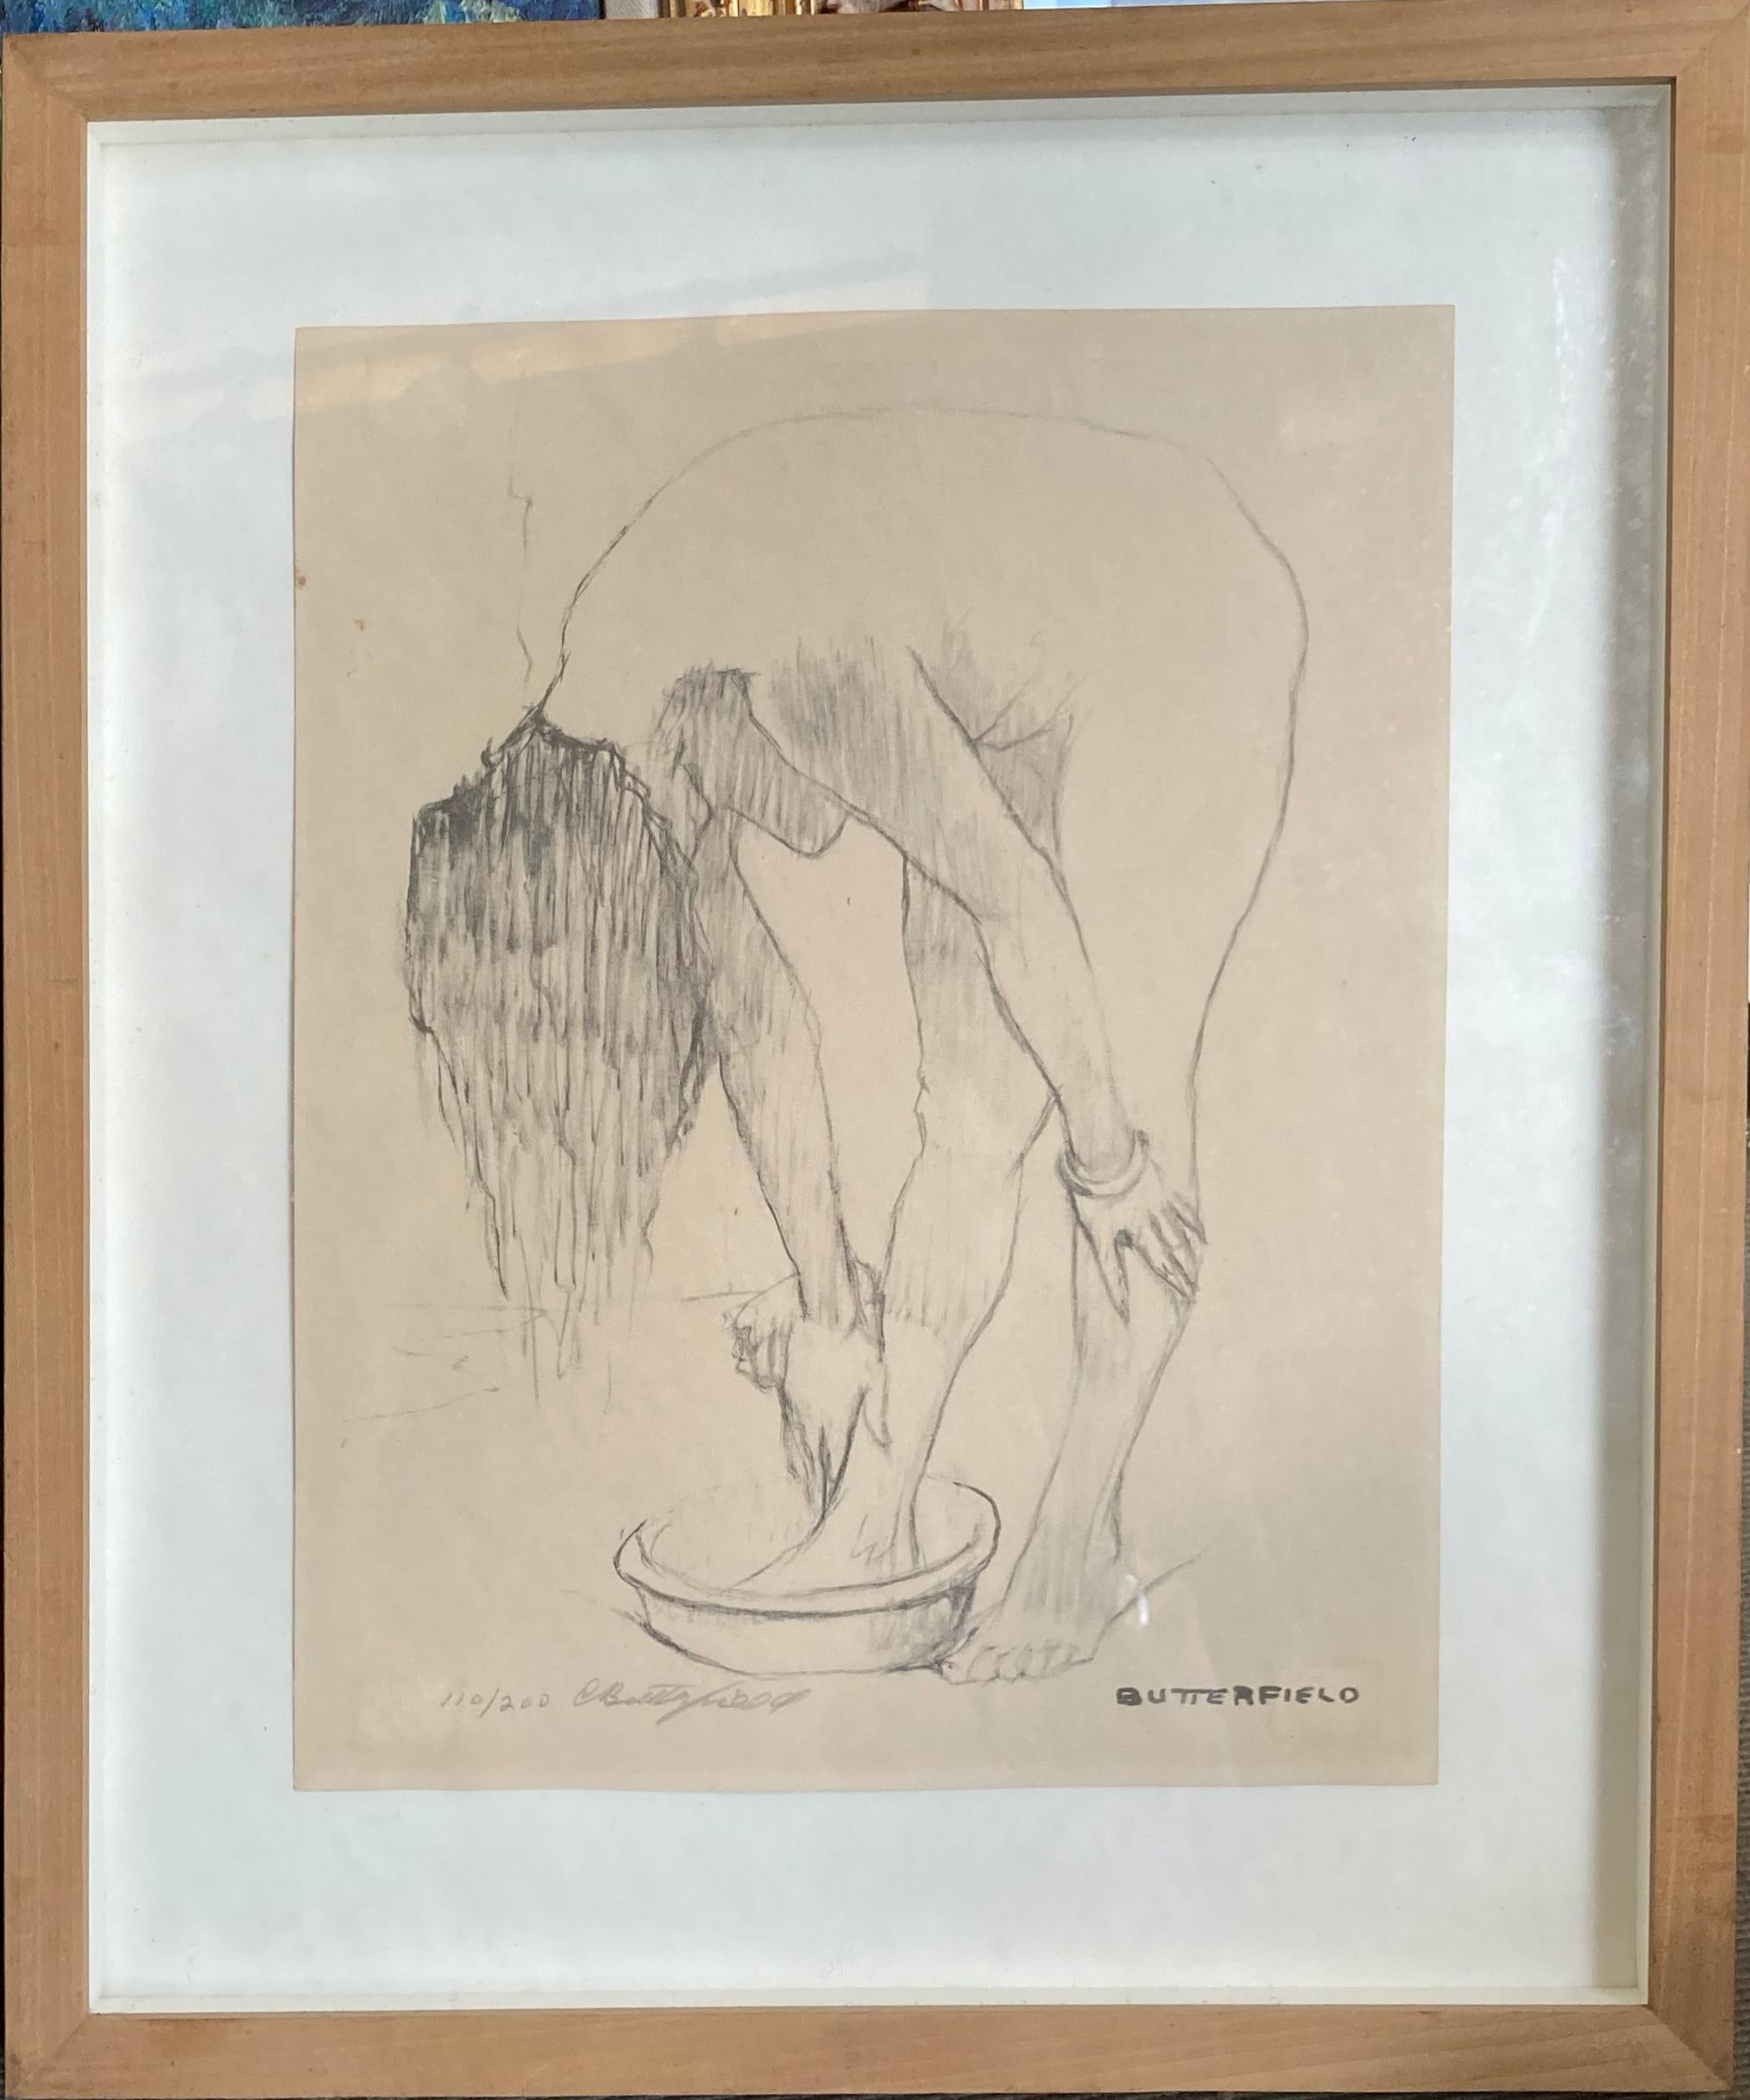 Figurative Print Cortland Butterfield - « Jeune femme lavande » - Imprimé nu encadré de la fin du XXe siècle signé